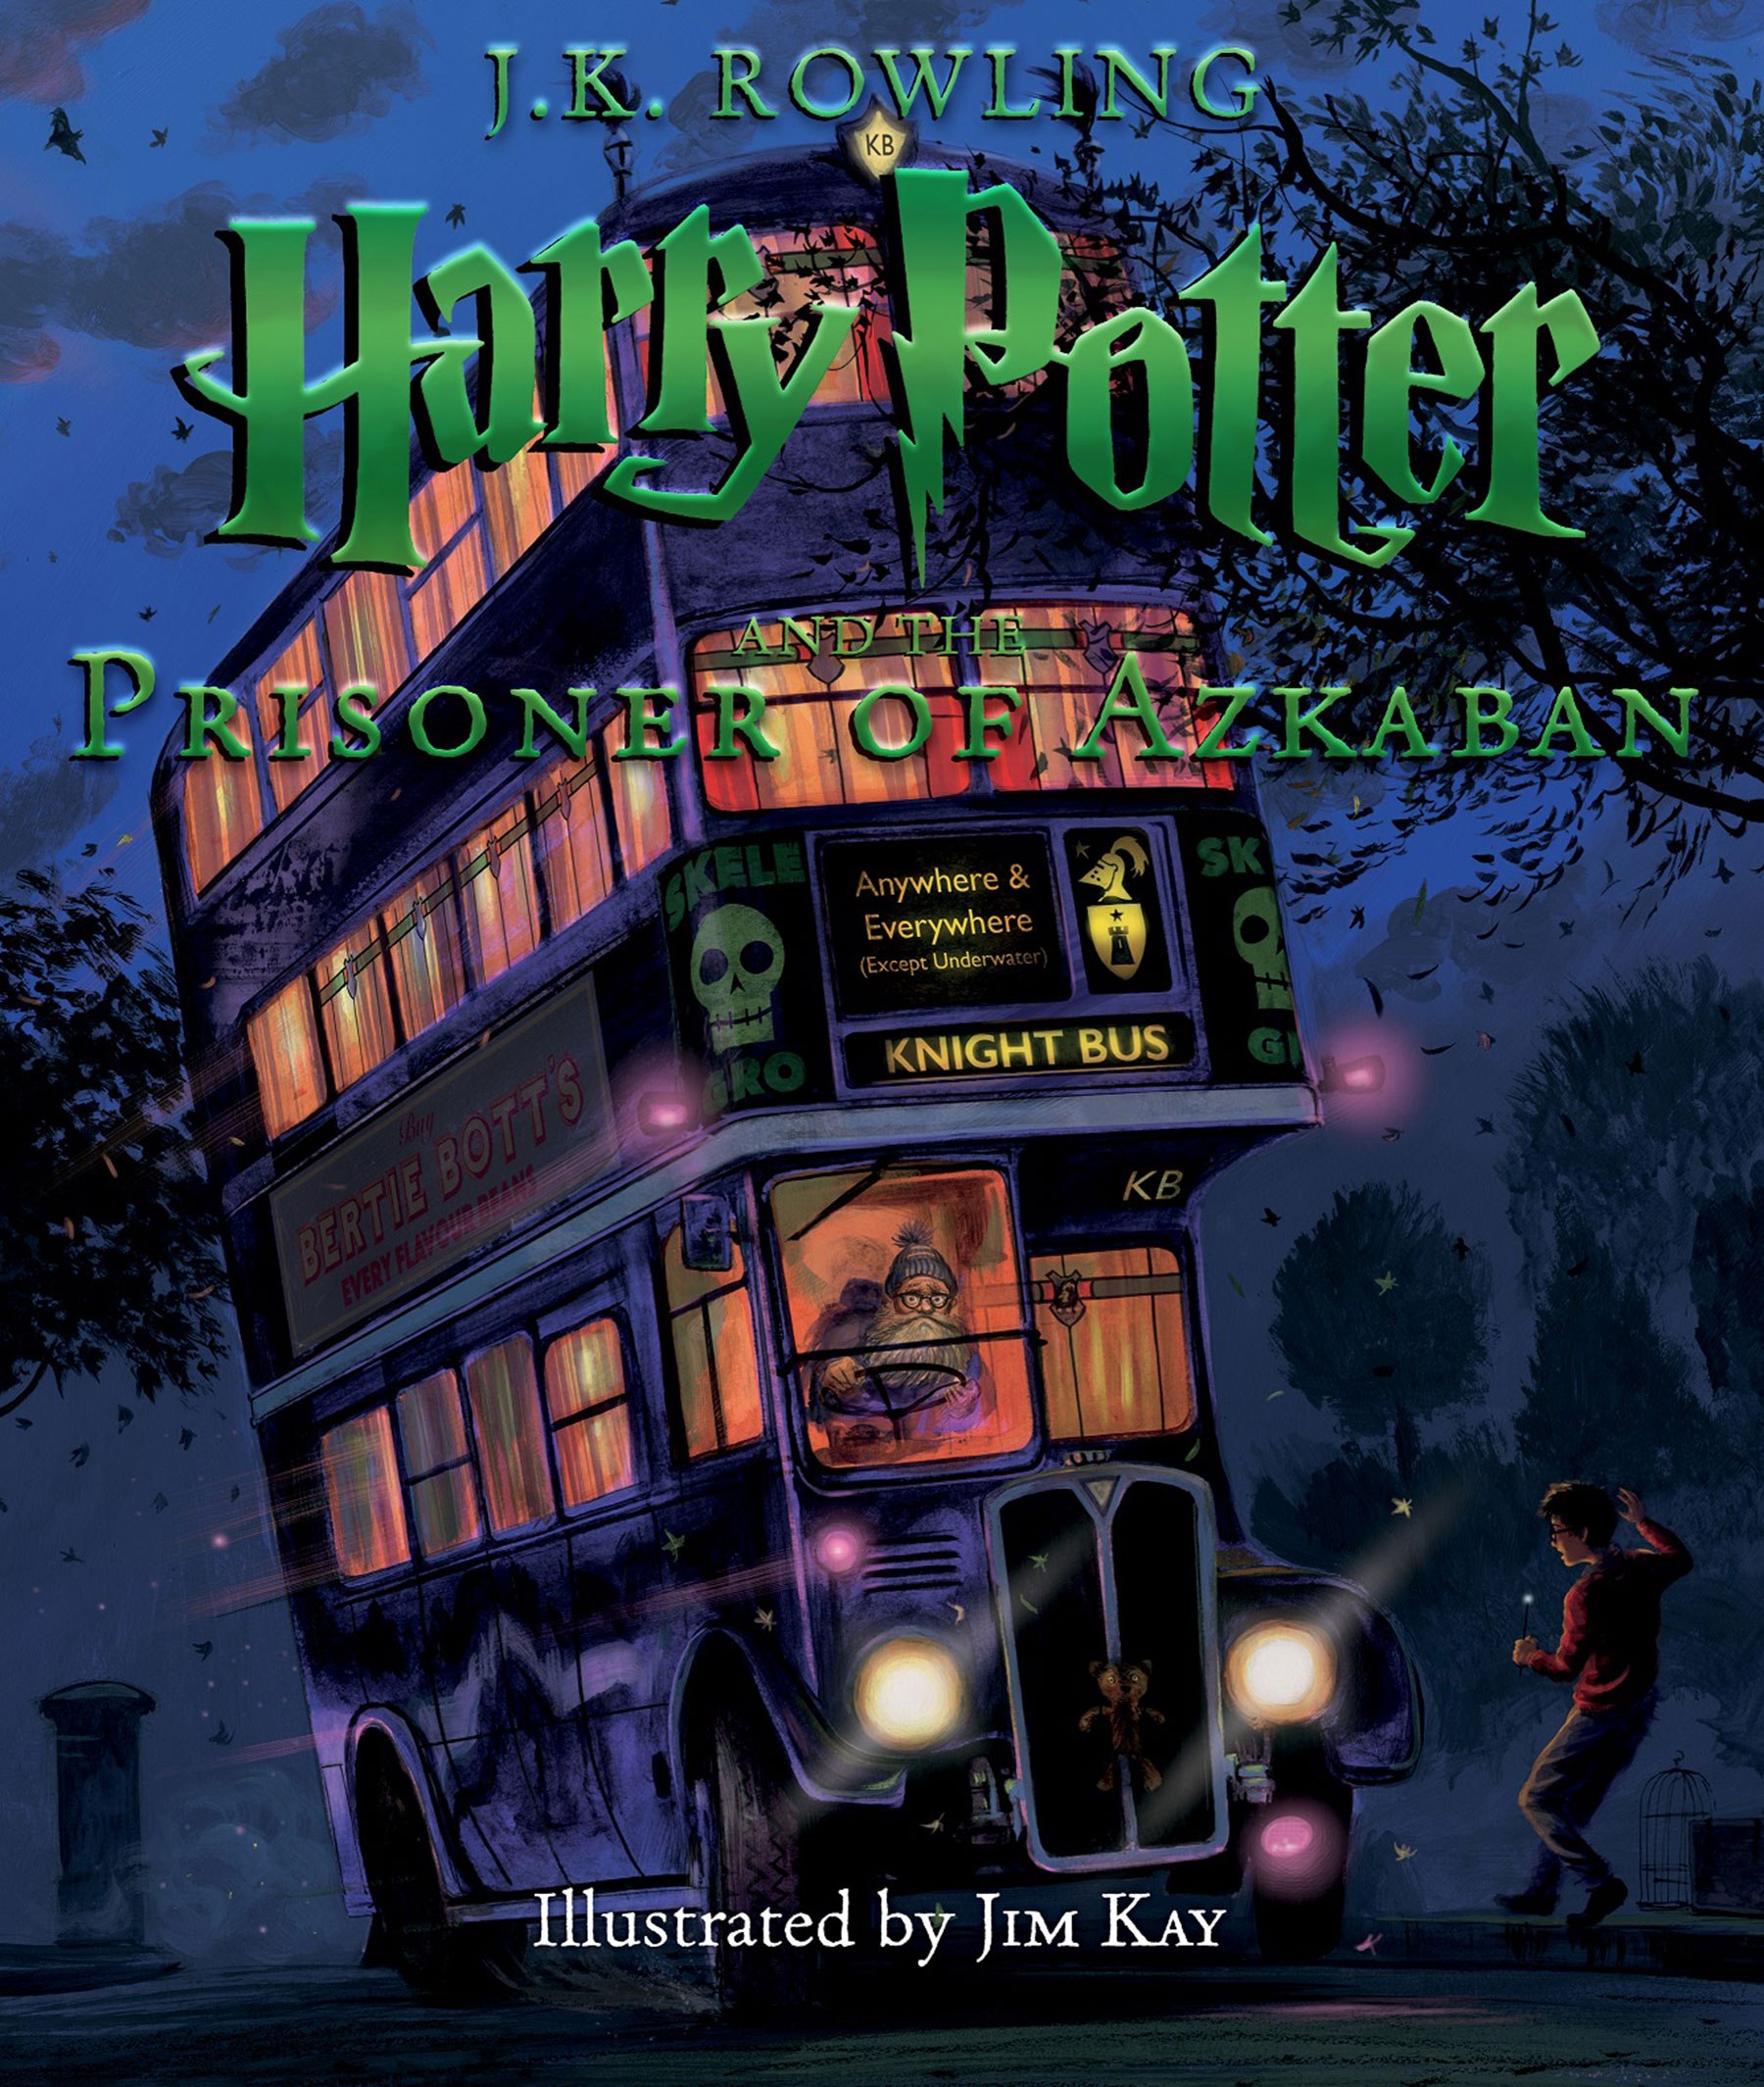 Harry potter and the prisoner of azkaban bloomsbury pdf download